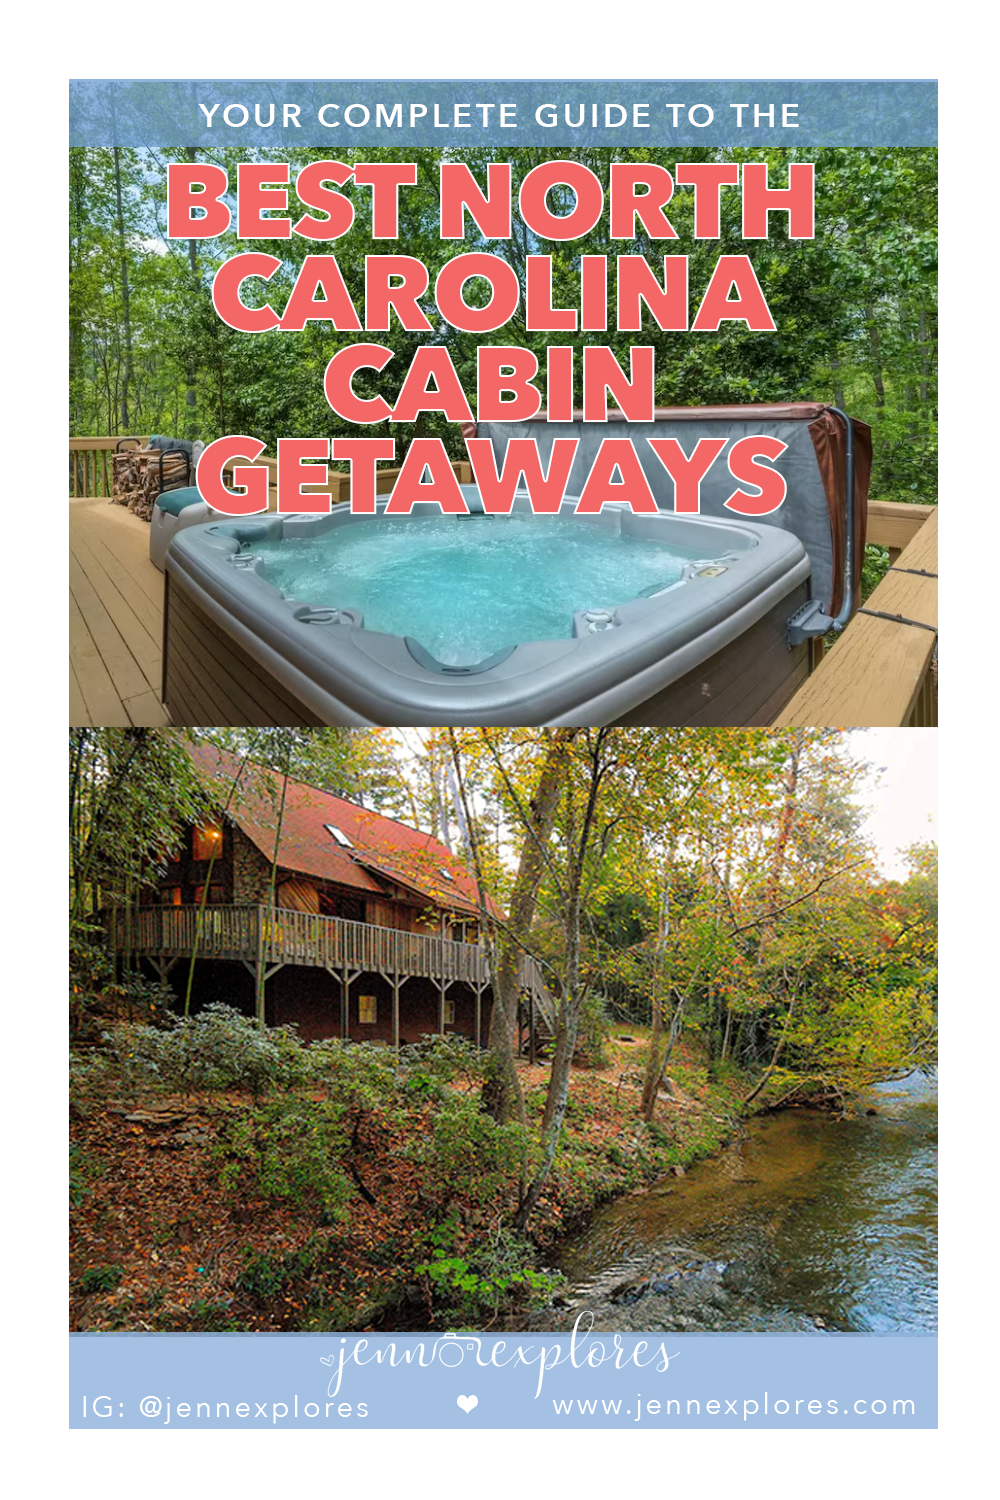 Cabin getaways in NC